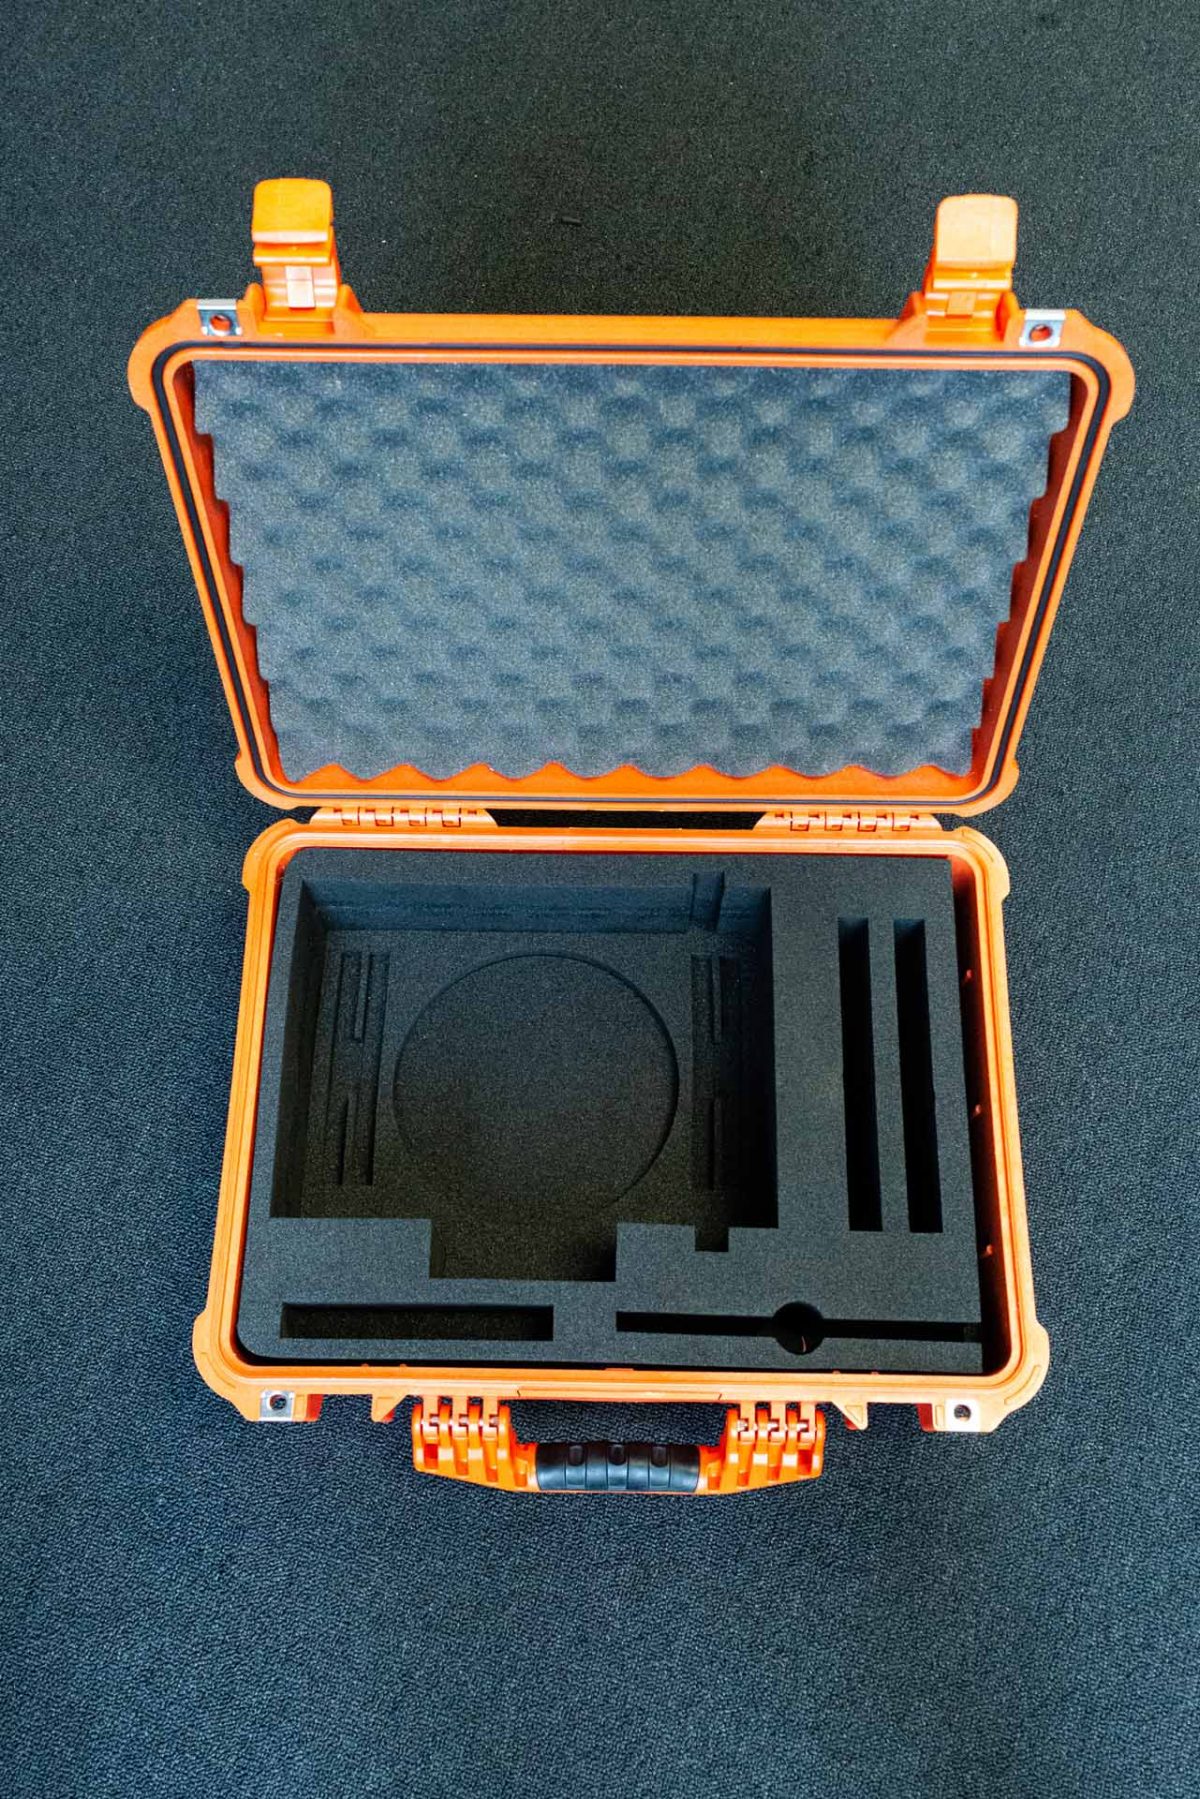 Custom Foam Case Inserts - Hard Case, Tool Box - Impact & Shock Proof